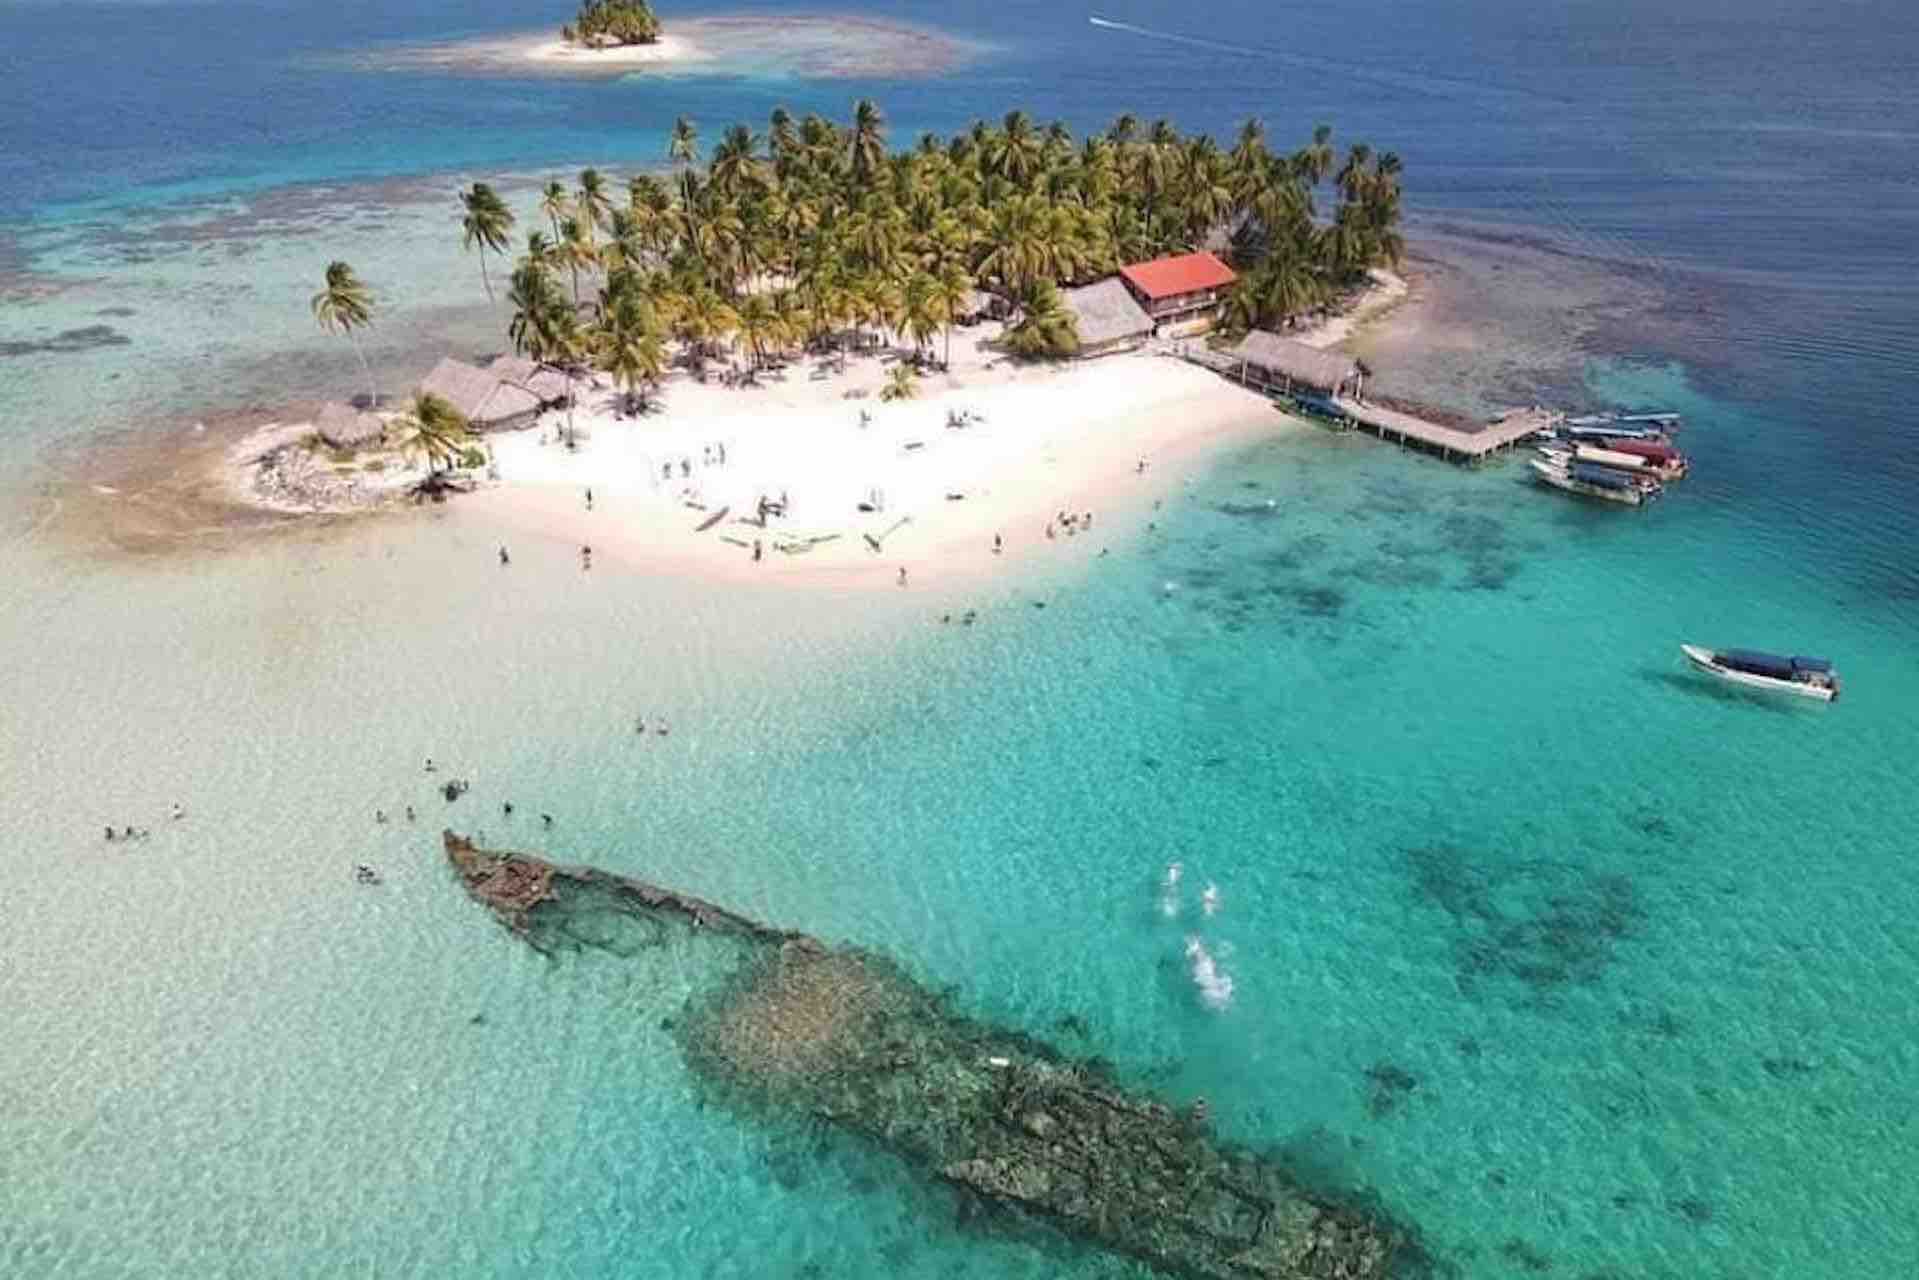 San Blas 3 Day Tour San Blas beach san blas overnight package Isla Perro island drone view of beach and shipwreck